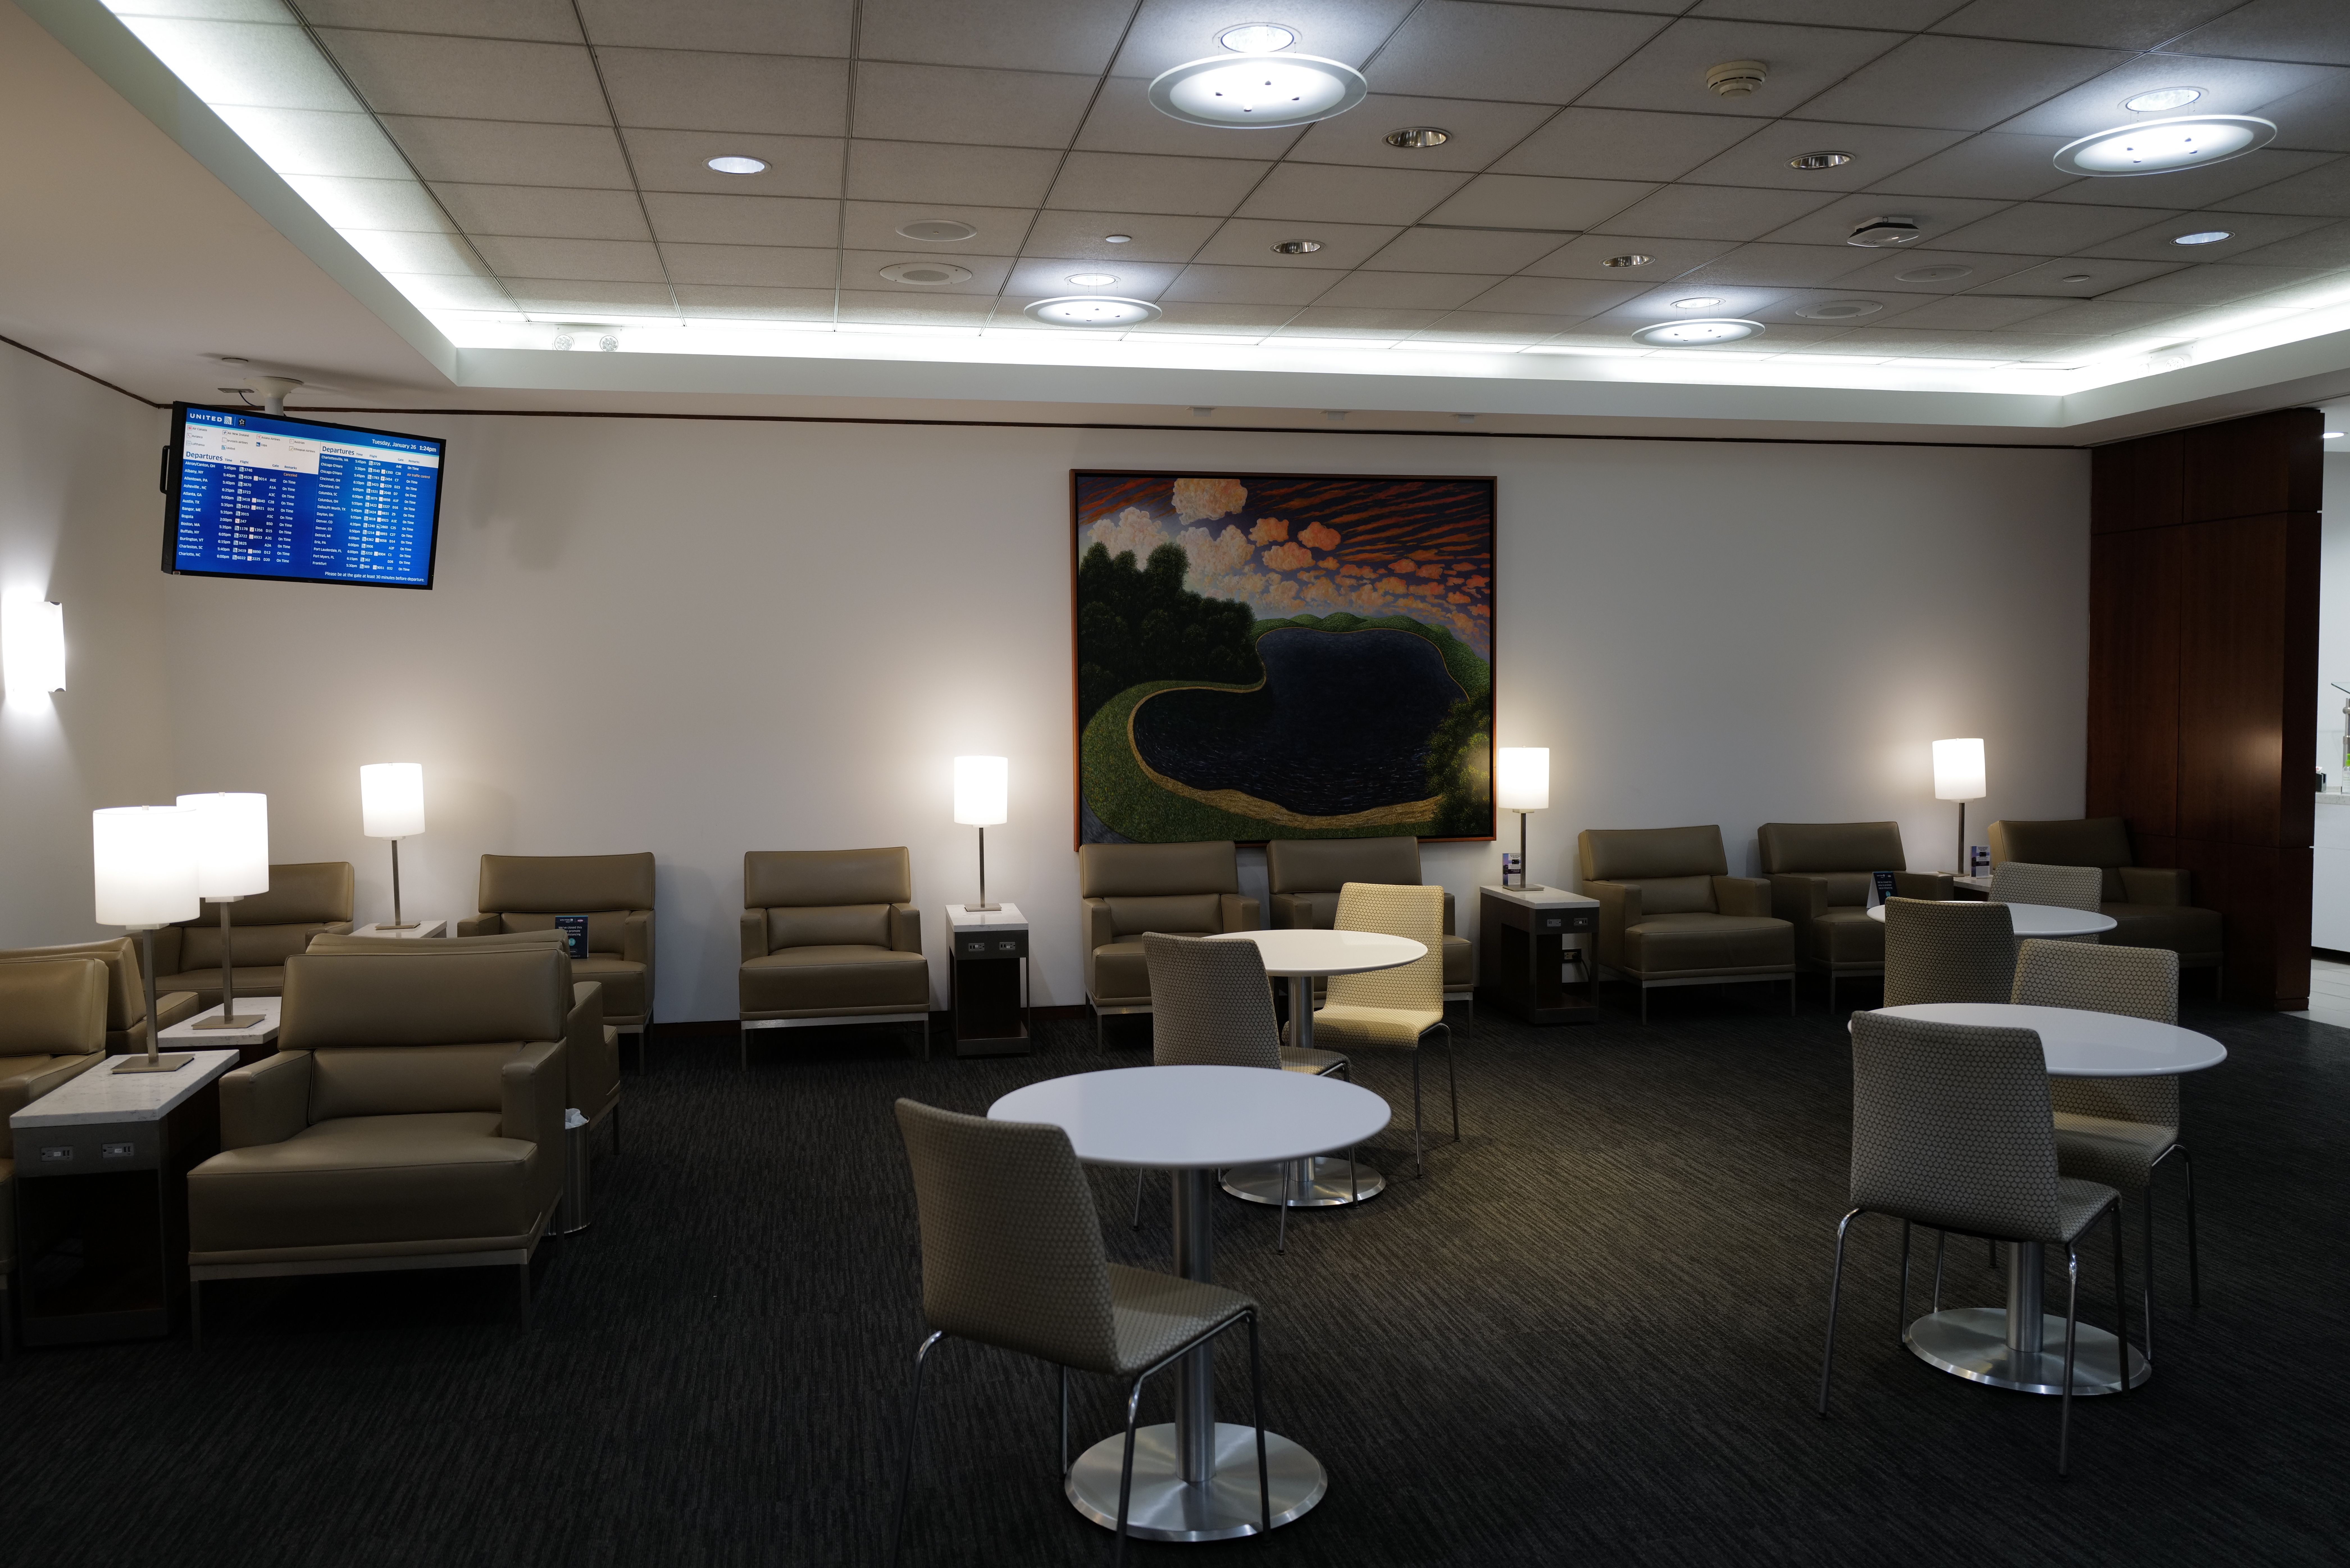 Seating at the United Club lounge at Washington Dulles International Airport. 